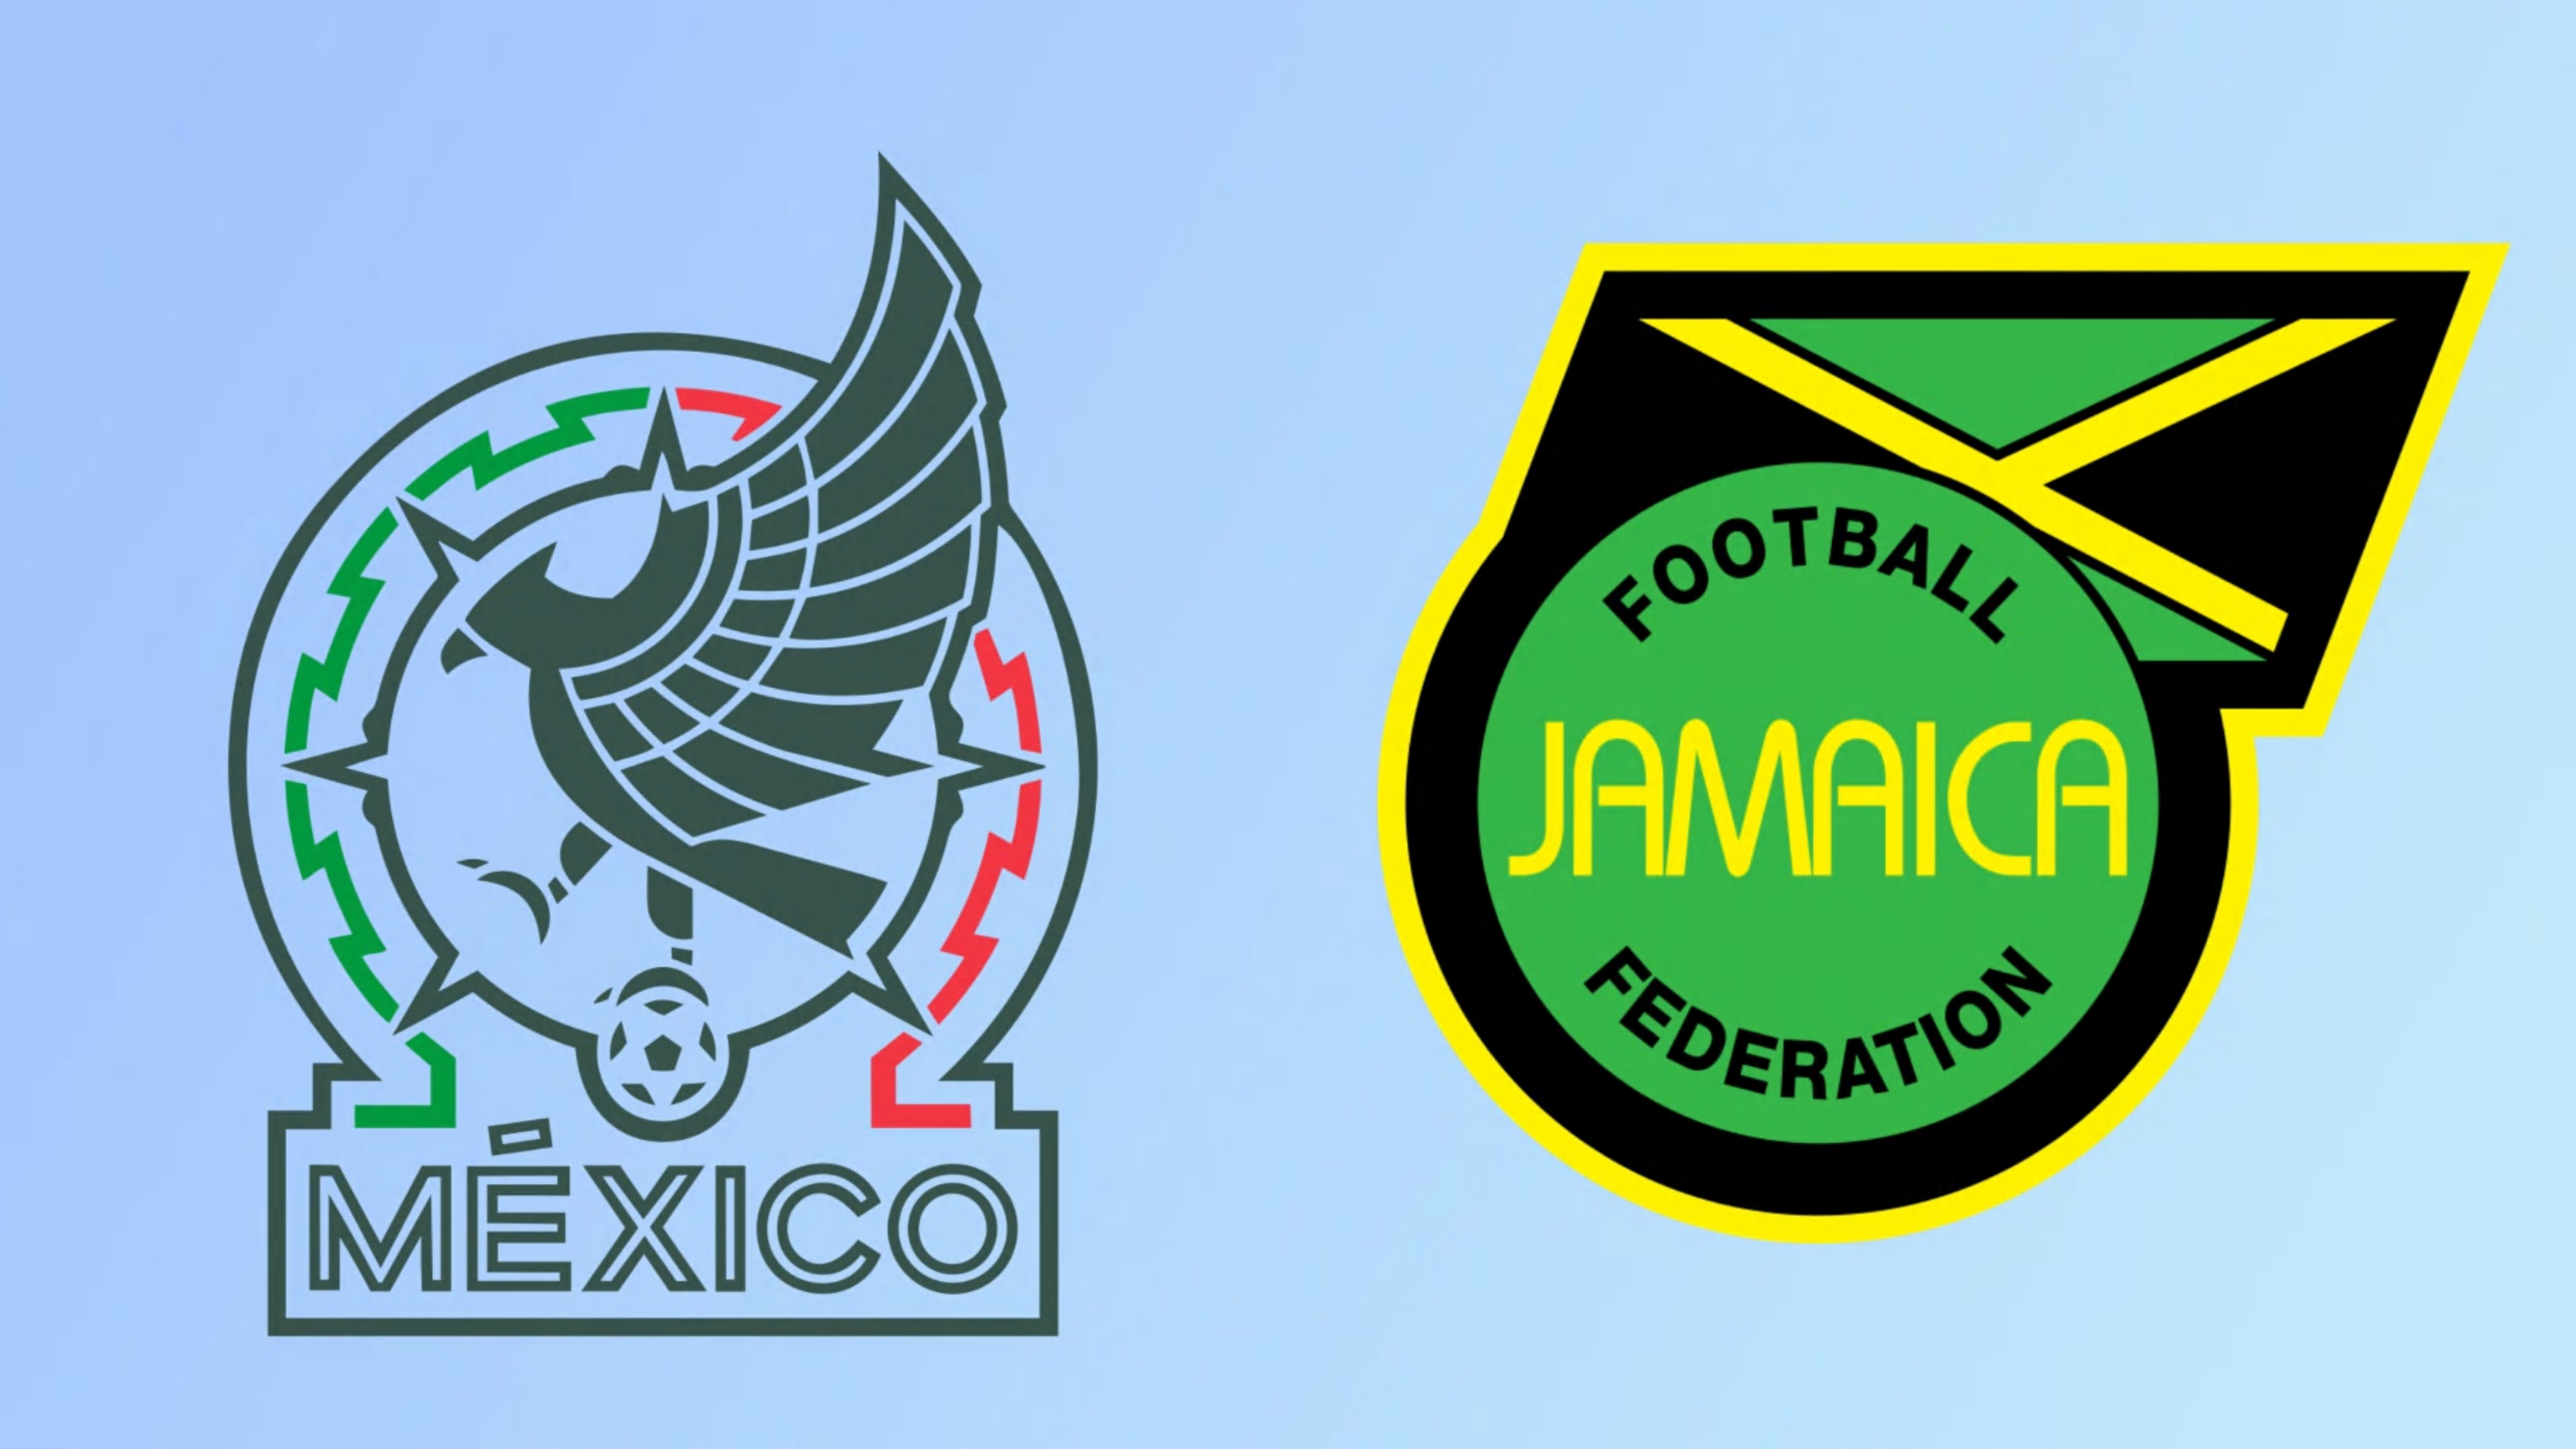 Mexico vs Jamaica: Preview, predictions and team news